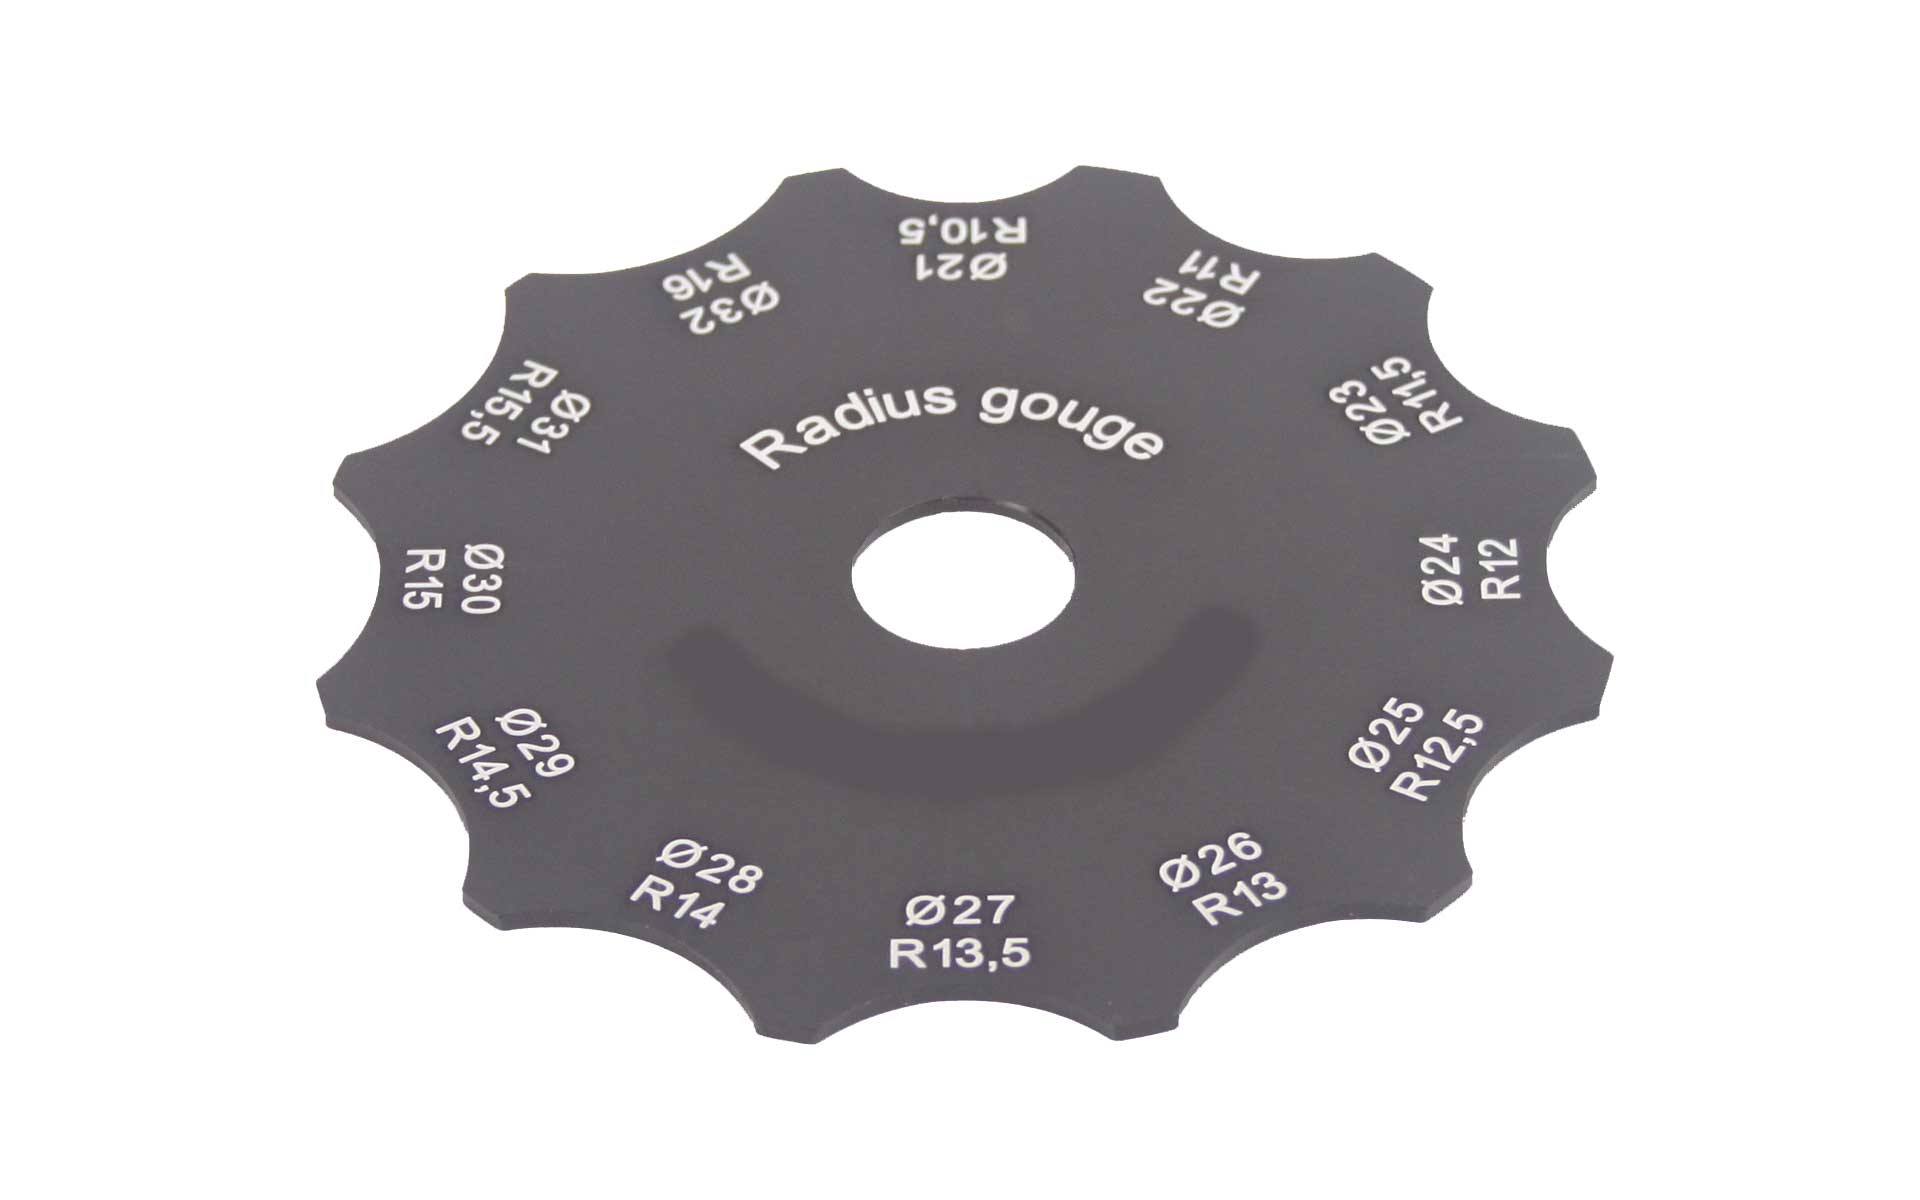 radius gauge D21 to D32